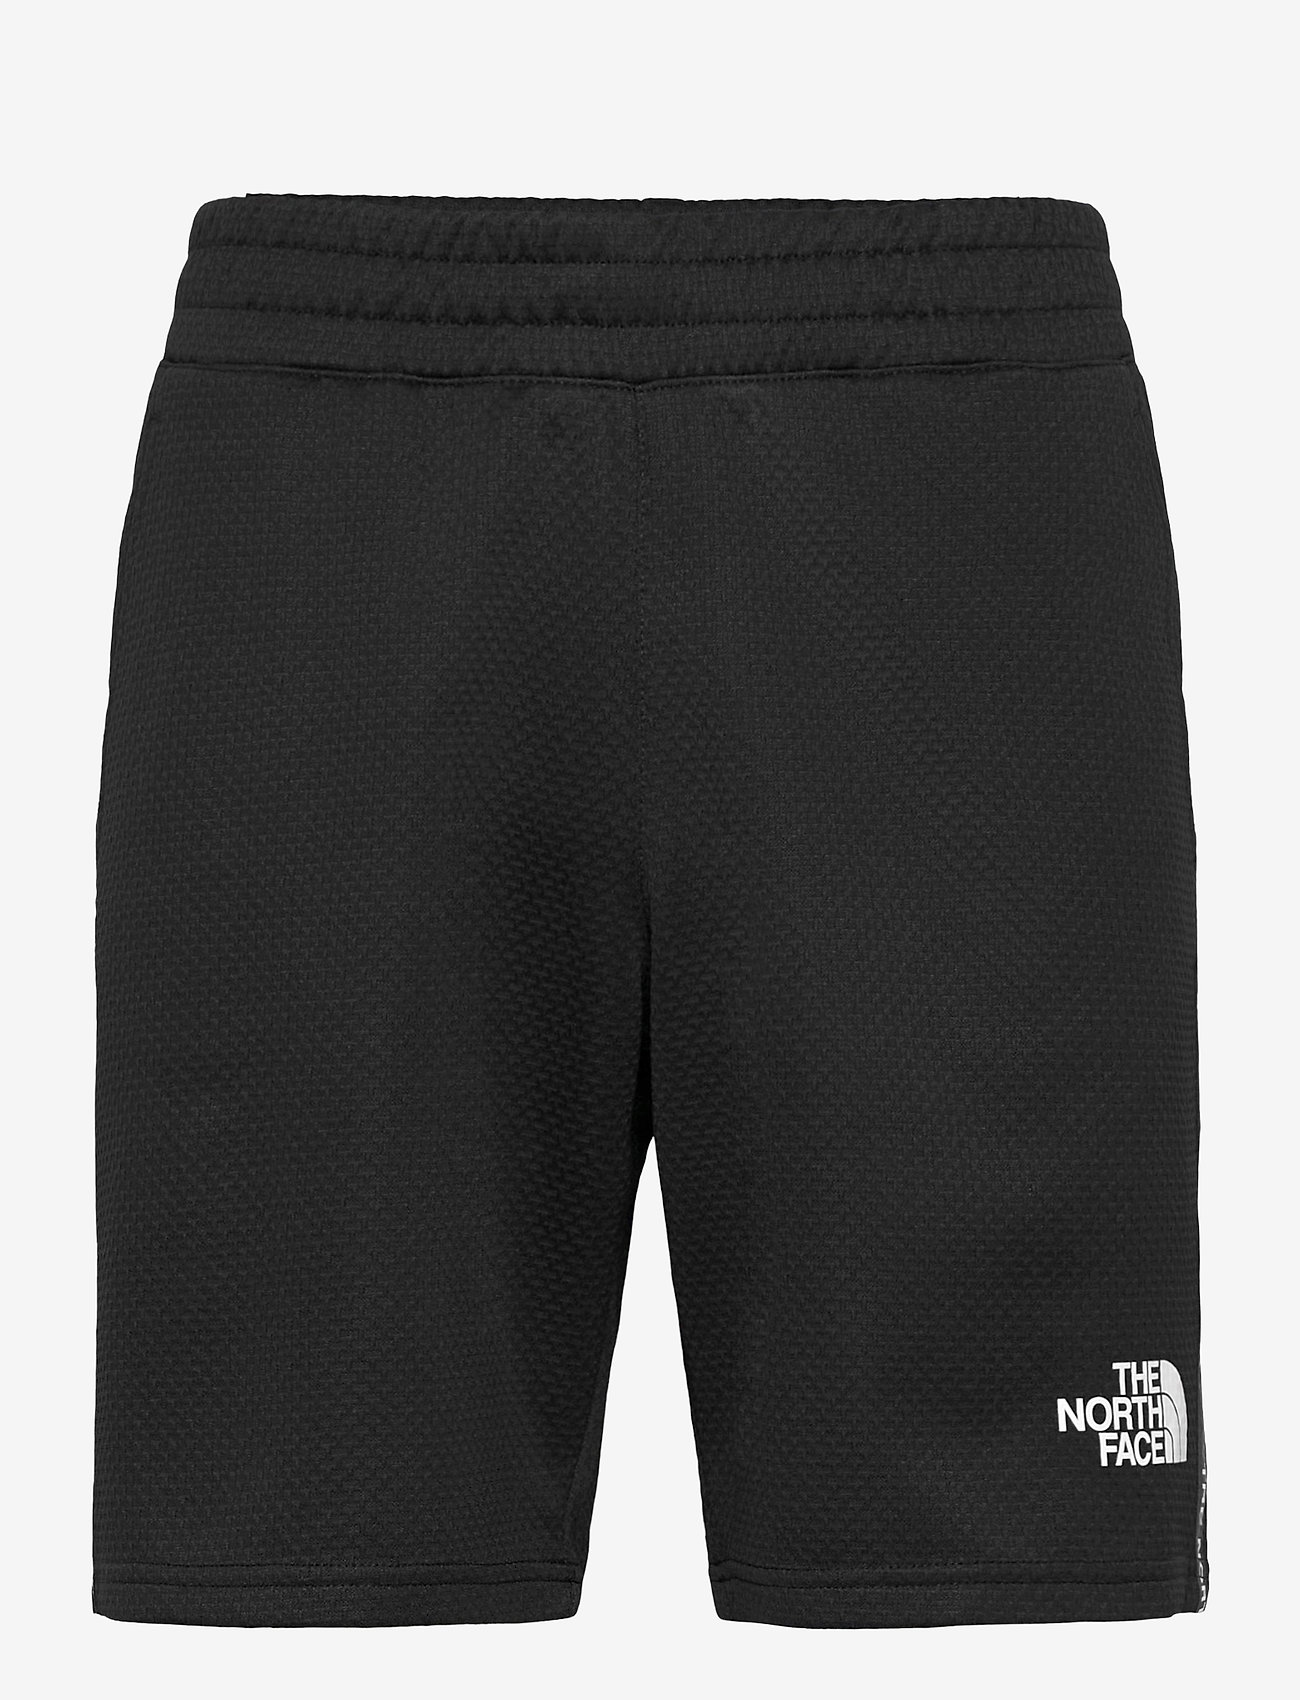 north face training shorts